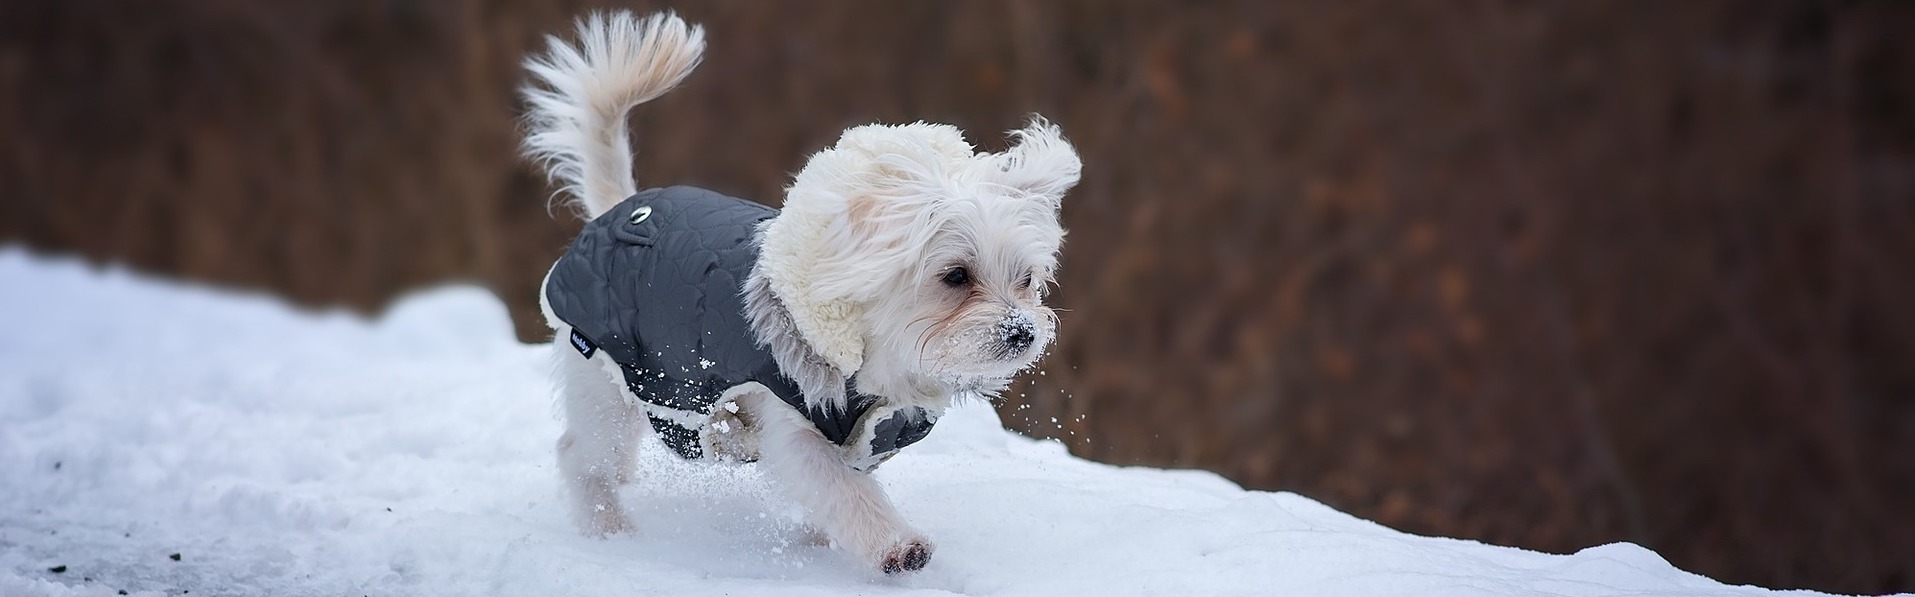 chien hiver manteau froid animaux